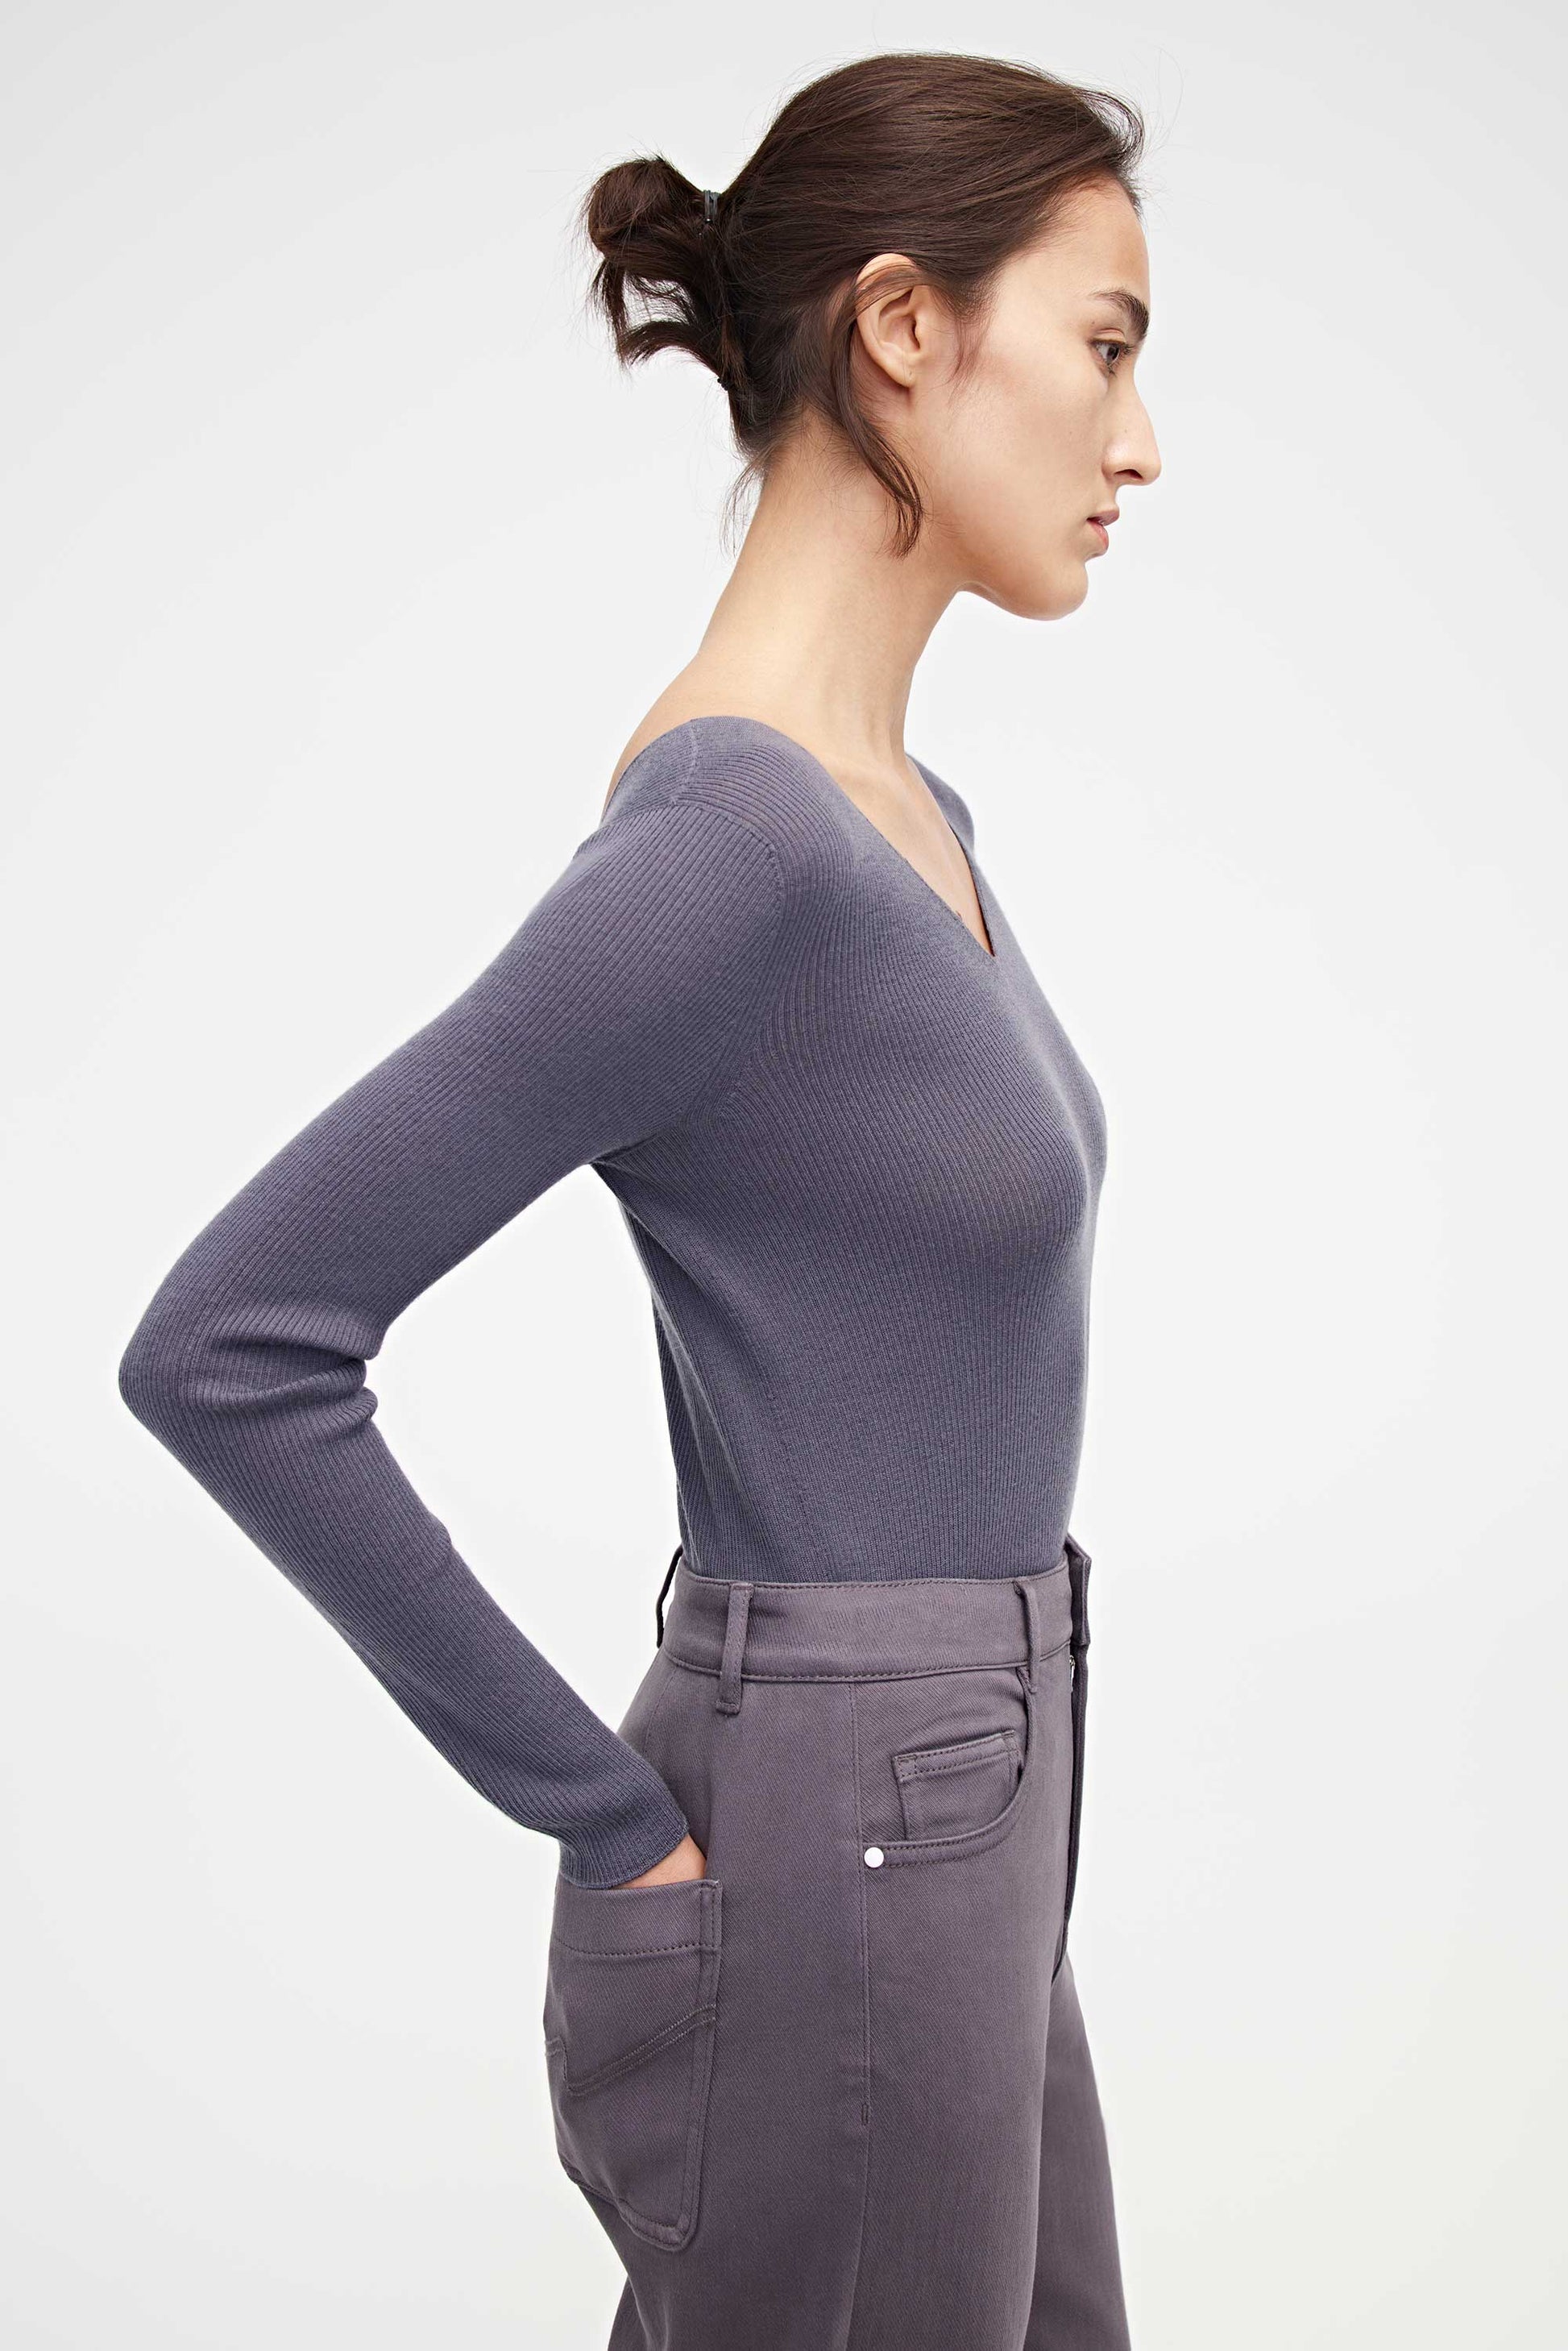 side look of woman in purple v neck sweater